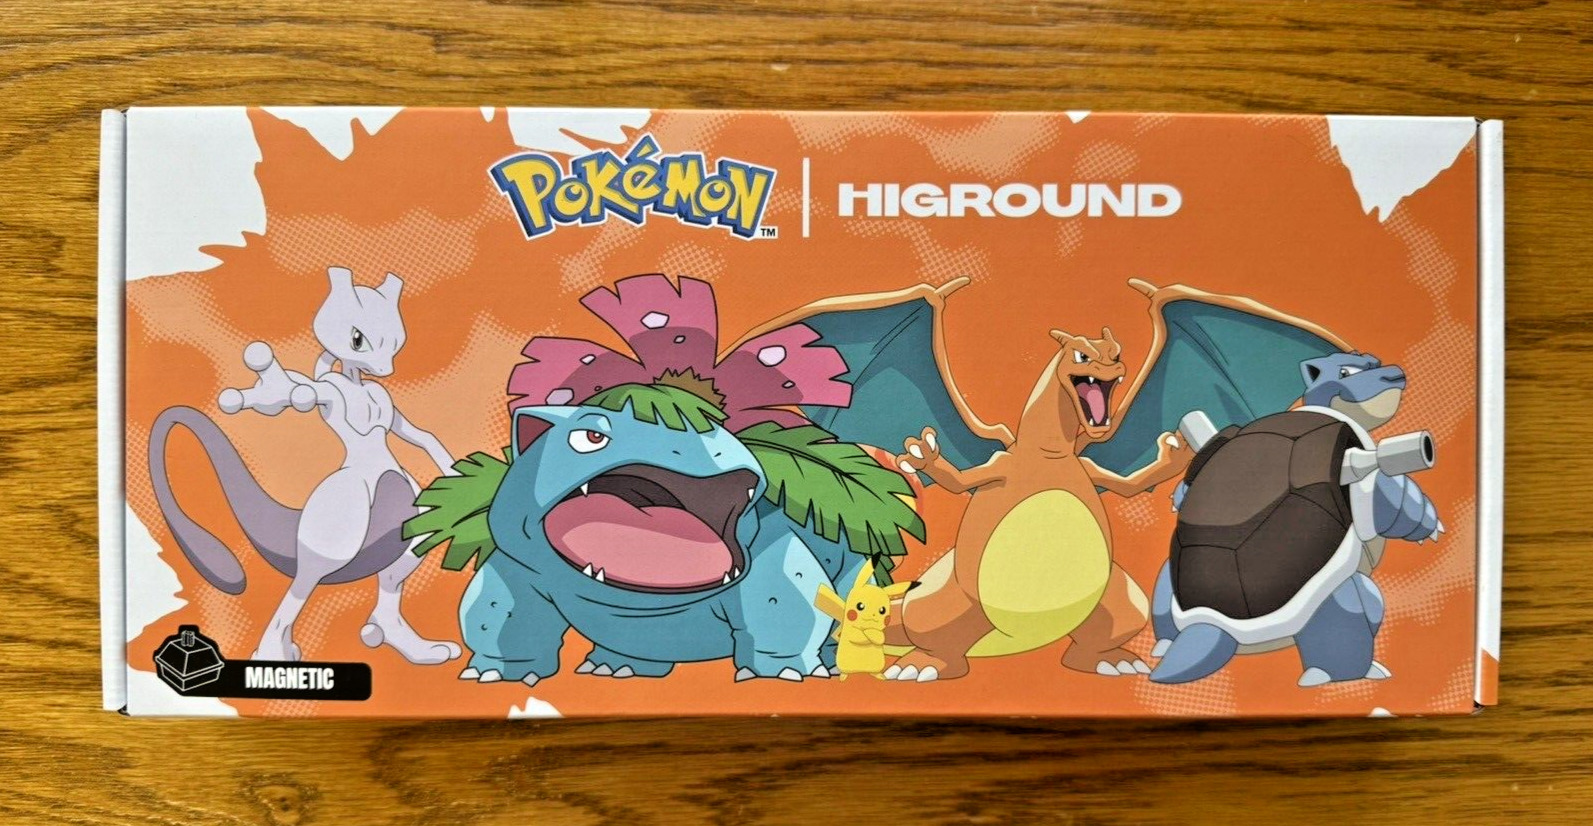 Pokémon + HG Higround Performance Base 65 Keyboard - Charizard New, IN HAND NOW